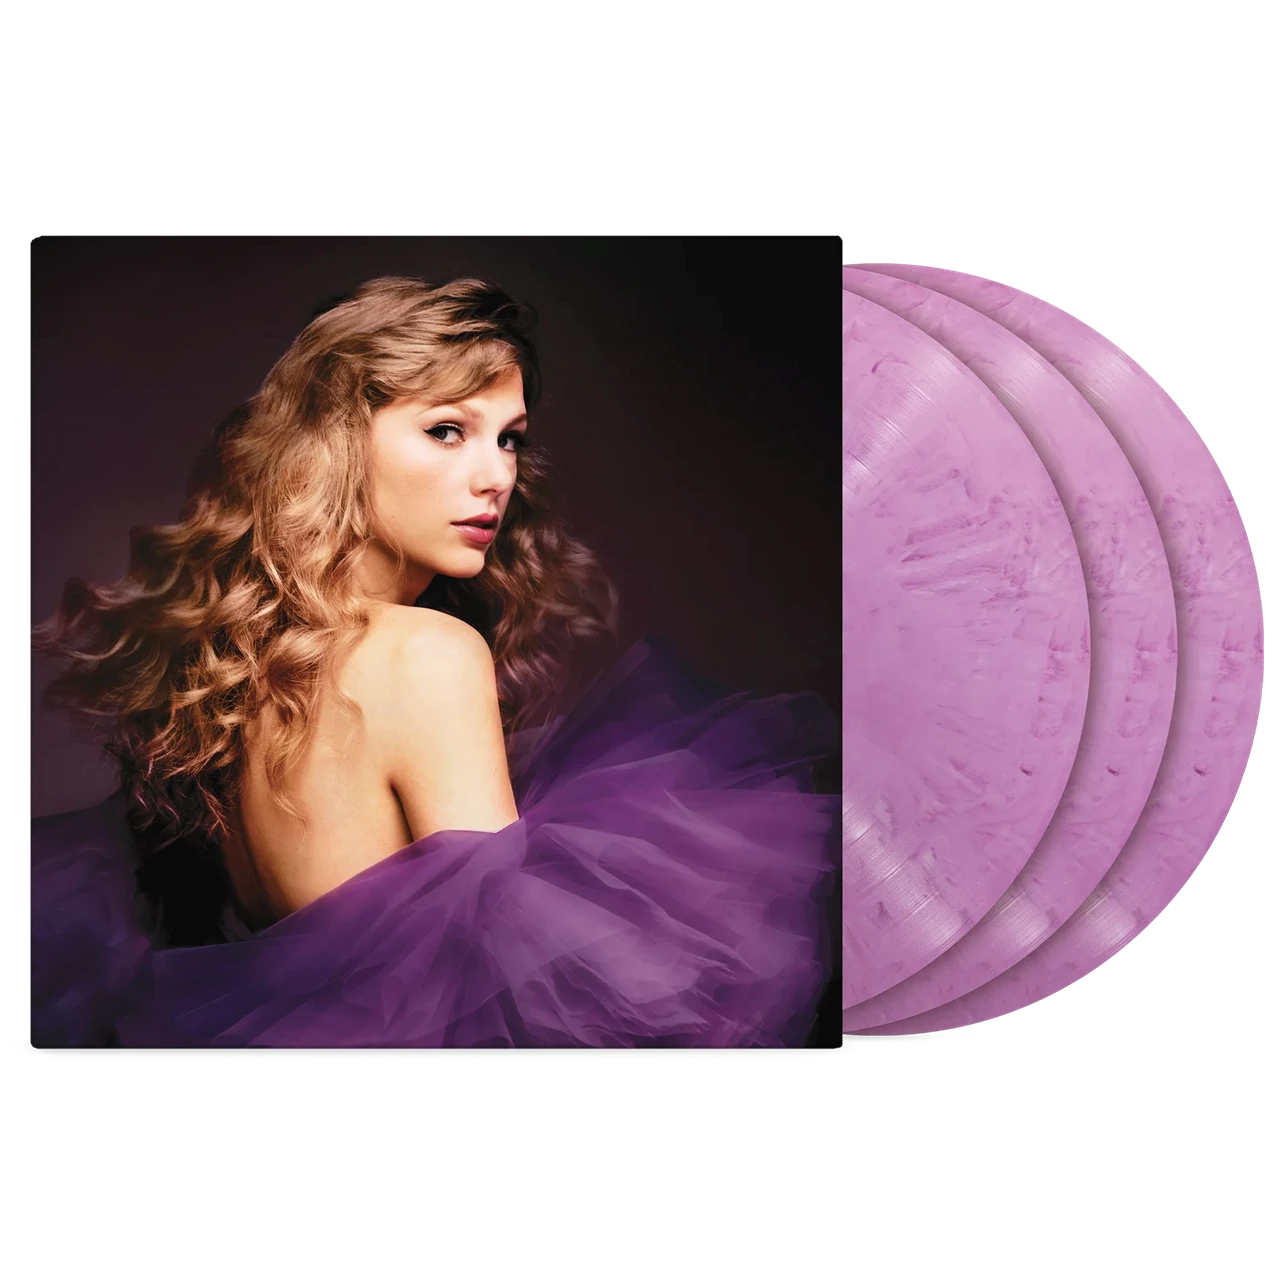 Taylor Swift - Speak Now - 3 x LILAC COLOURED VINYL LP SET - DELUXE